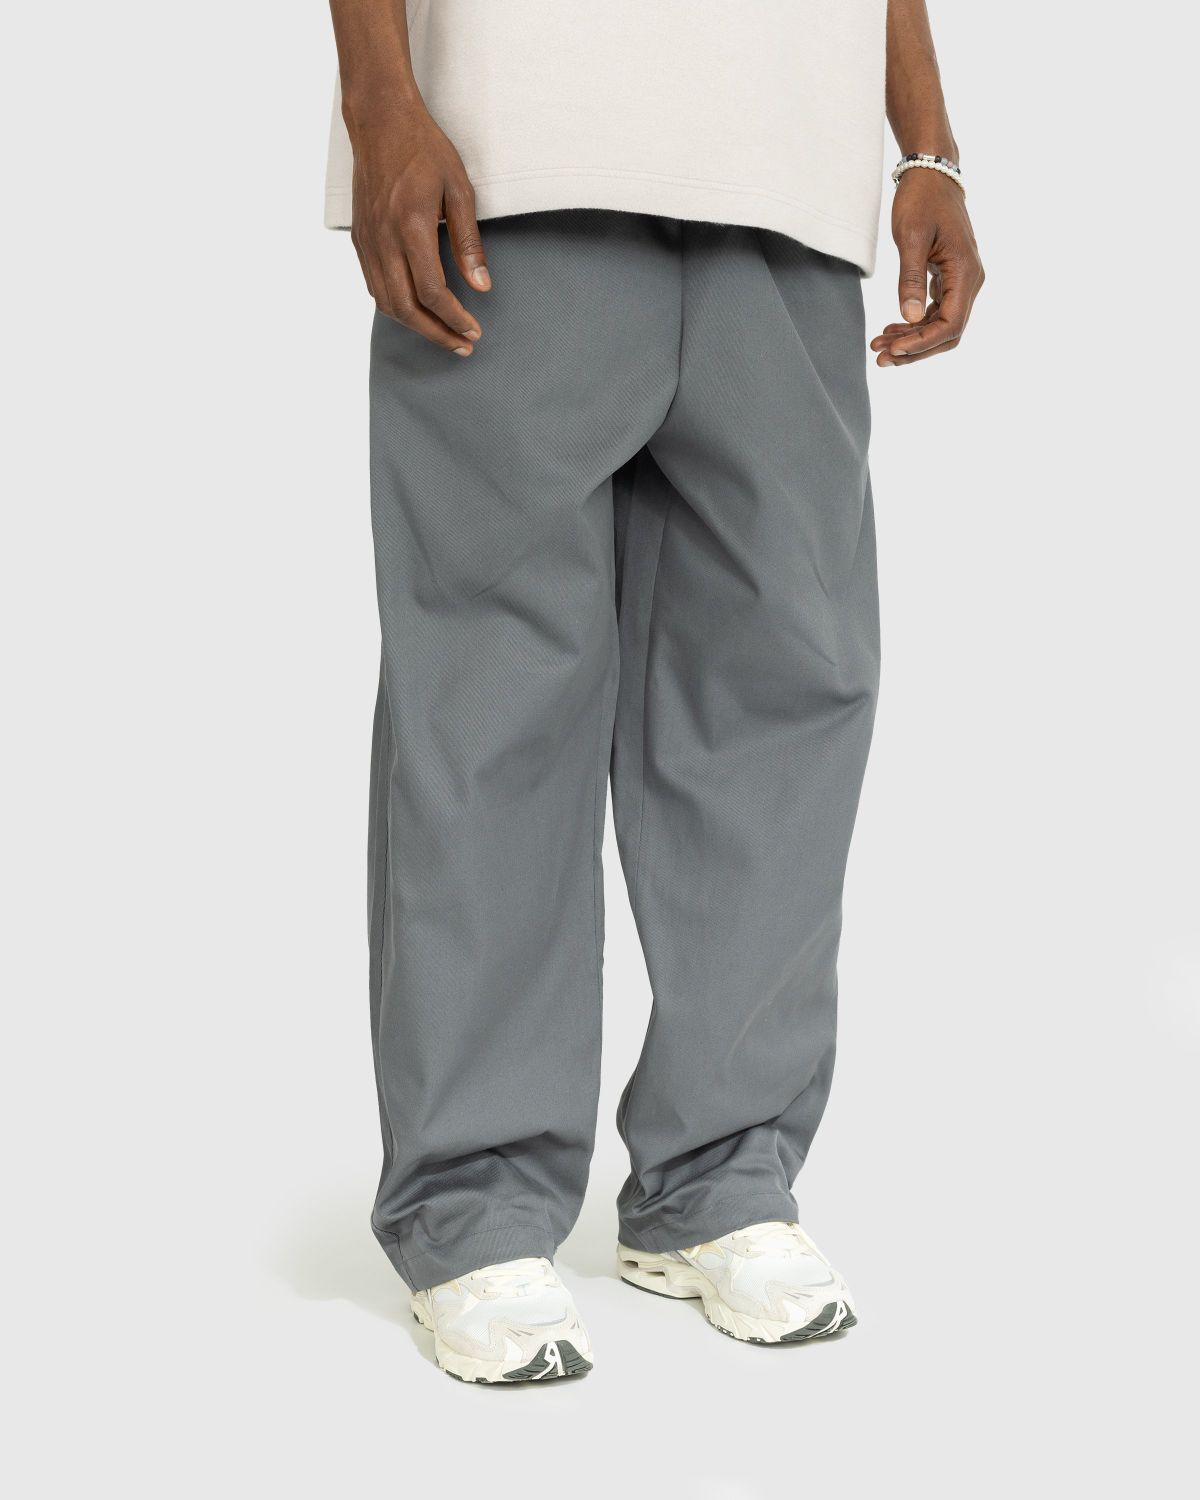 Acne Studios – Cotton Trousers Grey - Pants - Grey - Image 2